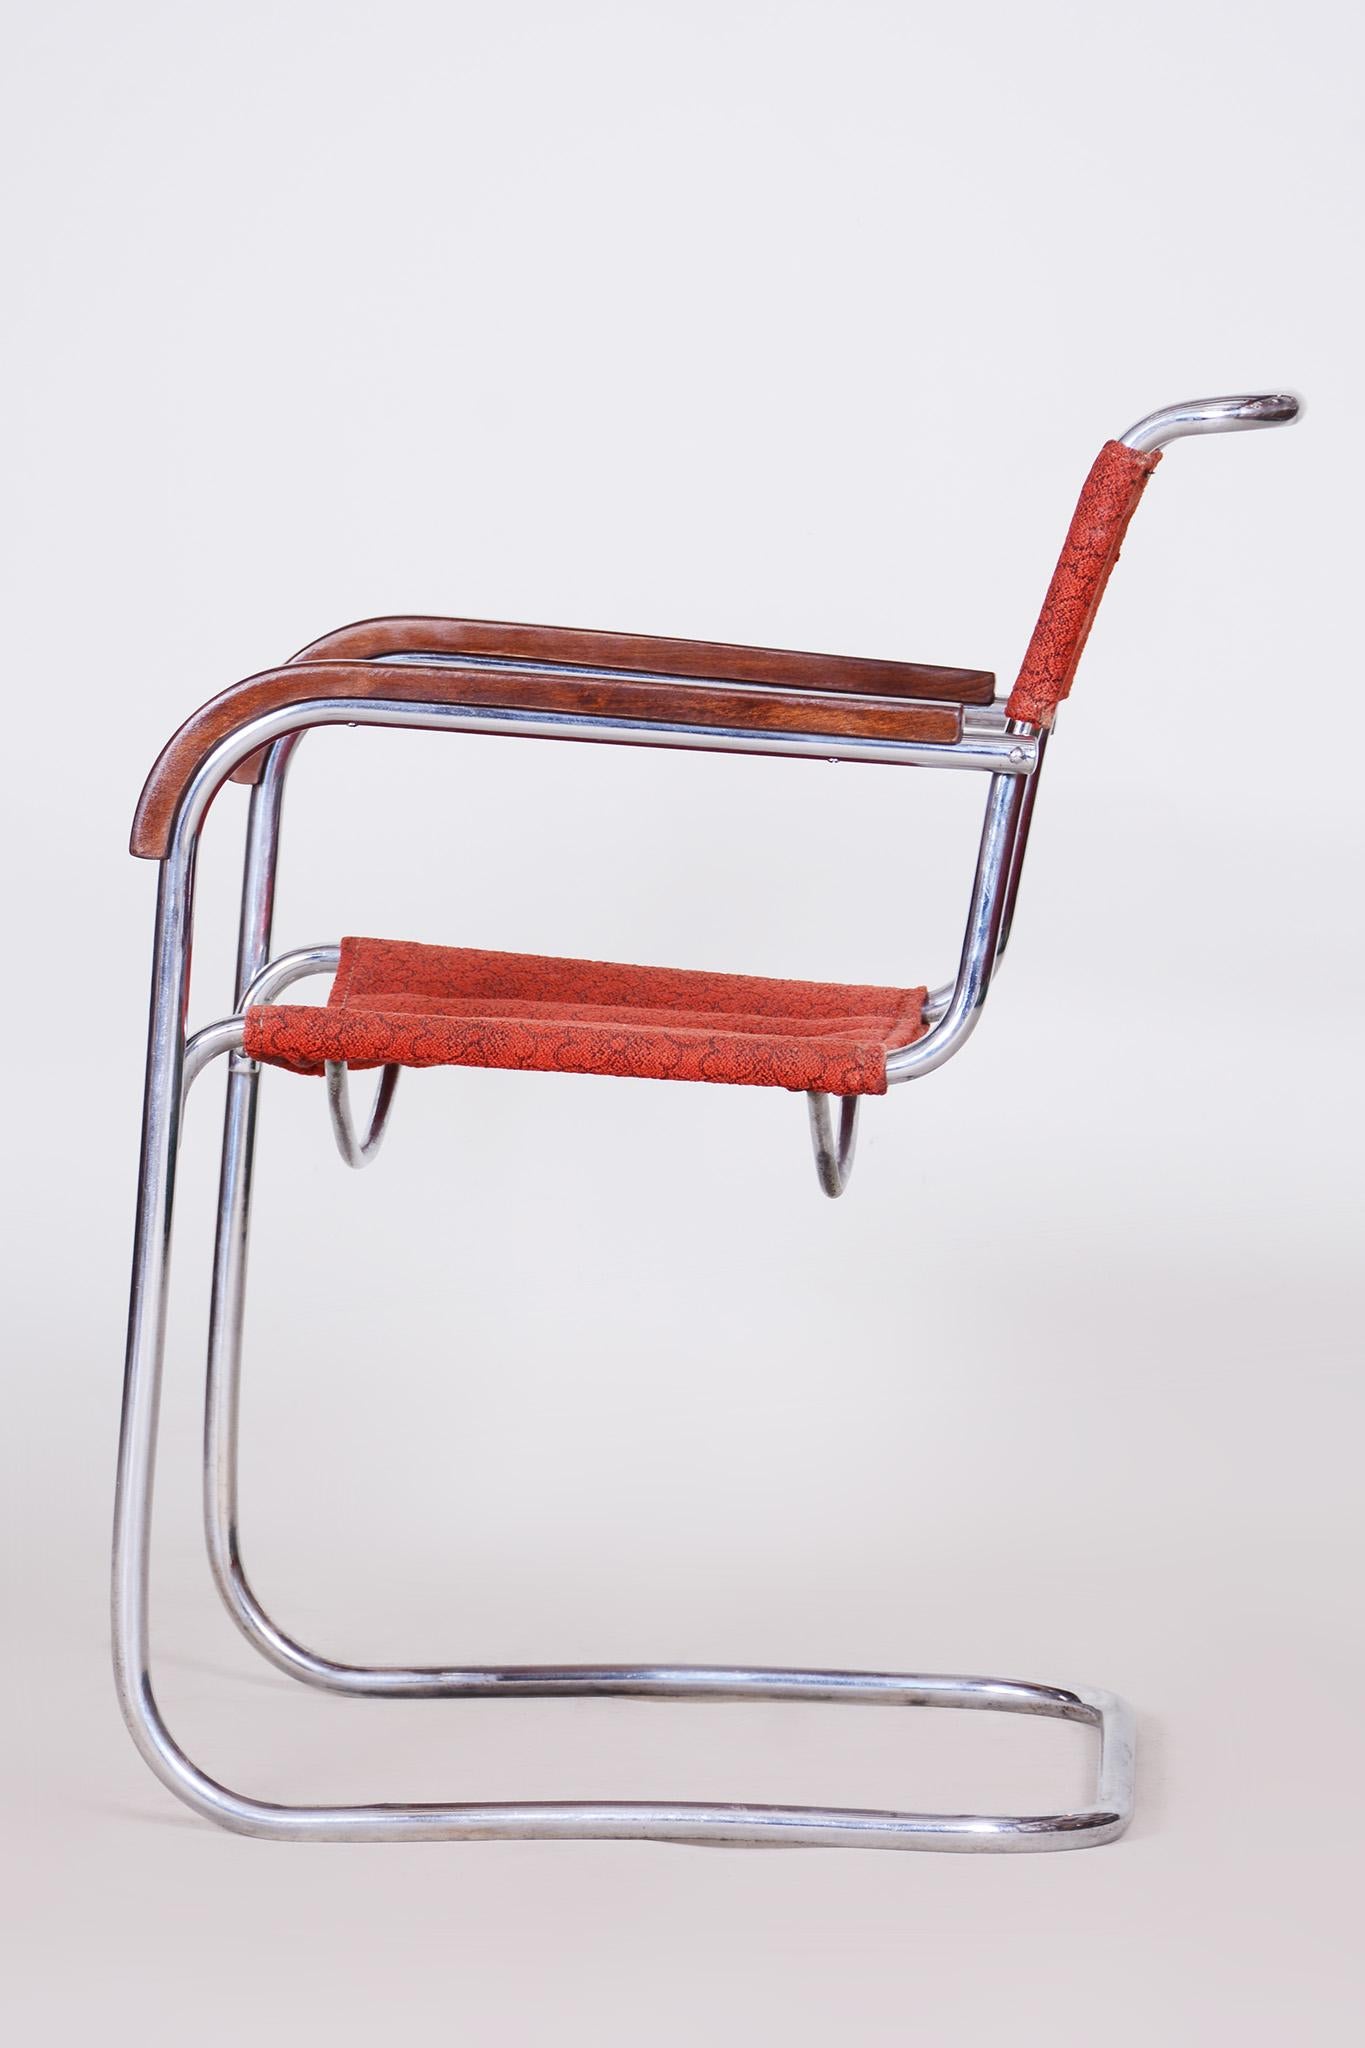 Red Bauhaus Armchair by Marcel Breuer, Mücke, Melder, Beech, Chrome, 1930s For Sale 3